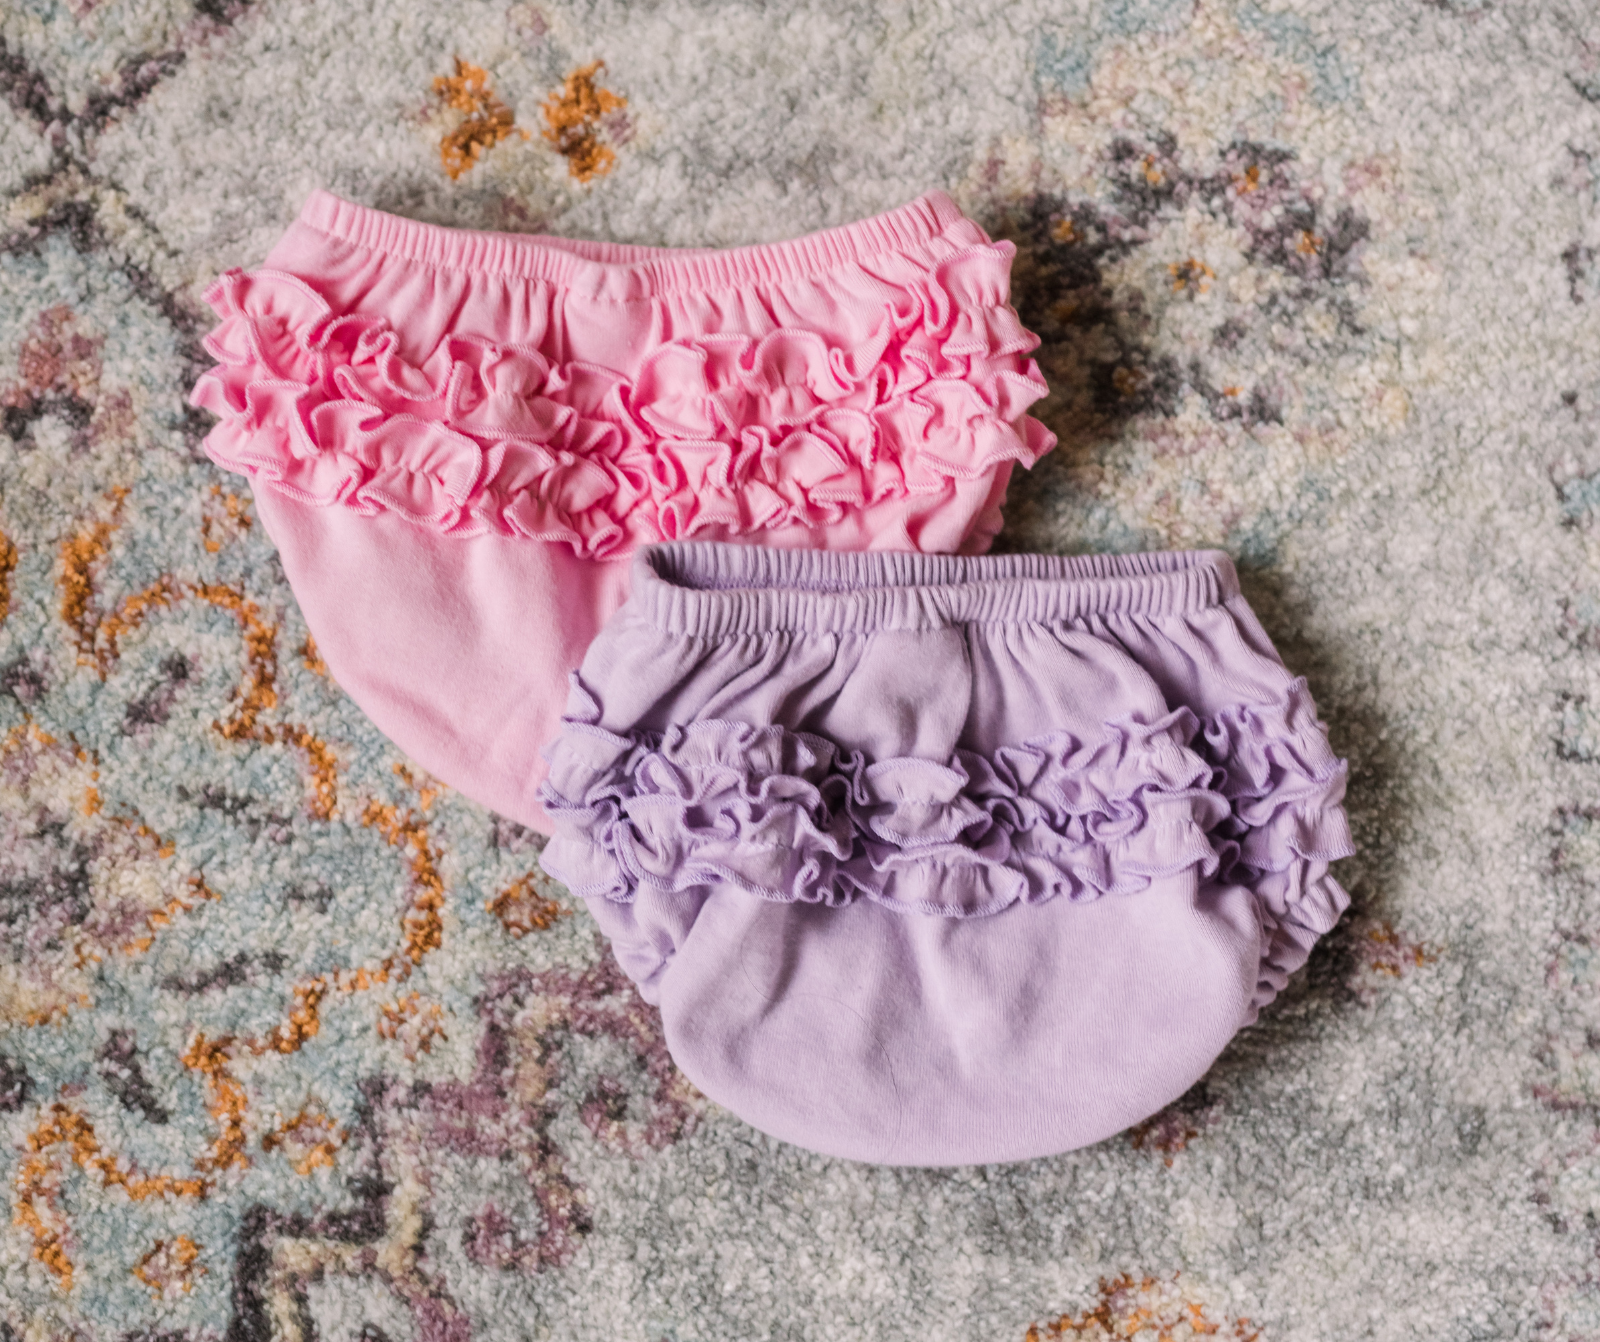  XMS-Tech Diaper Covers for Girl Cute Newborn Toddler